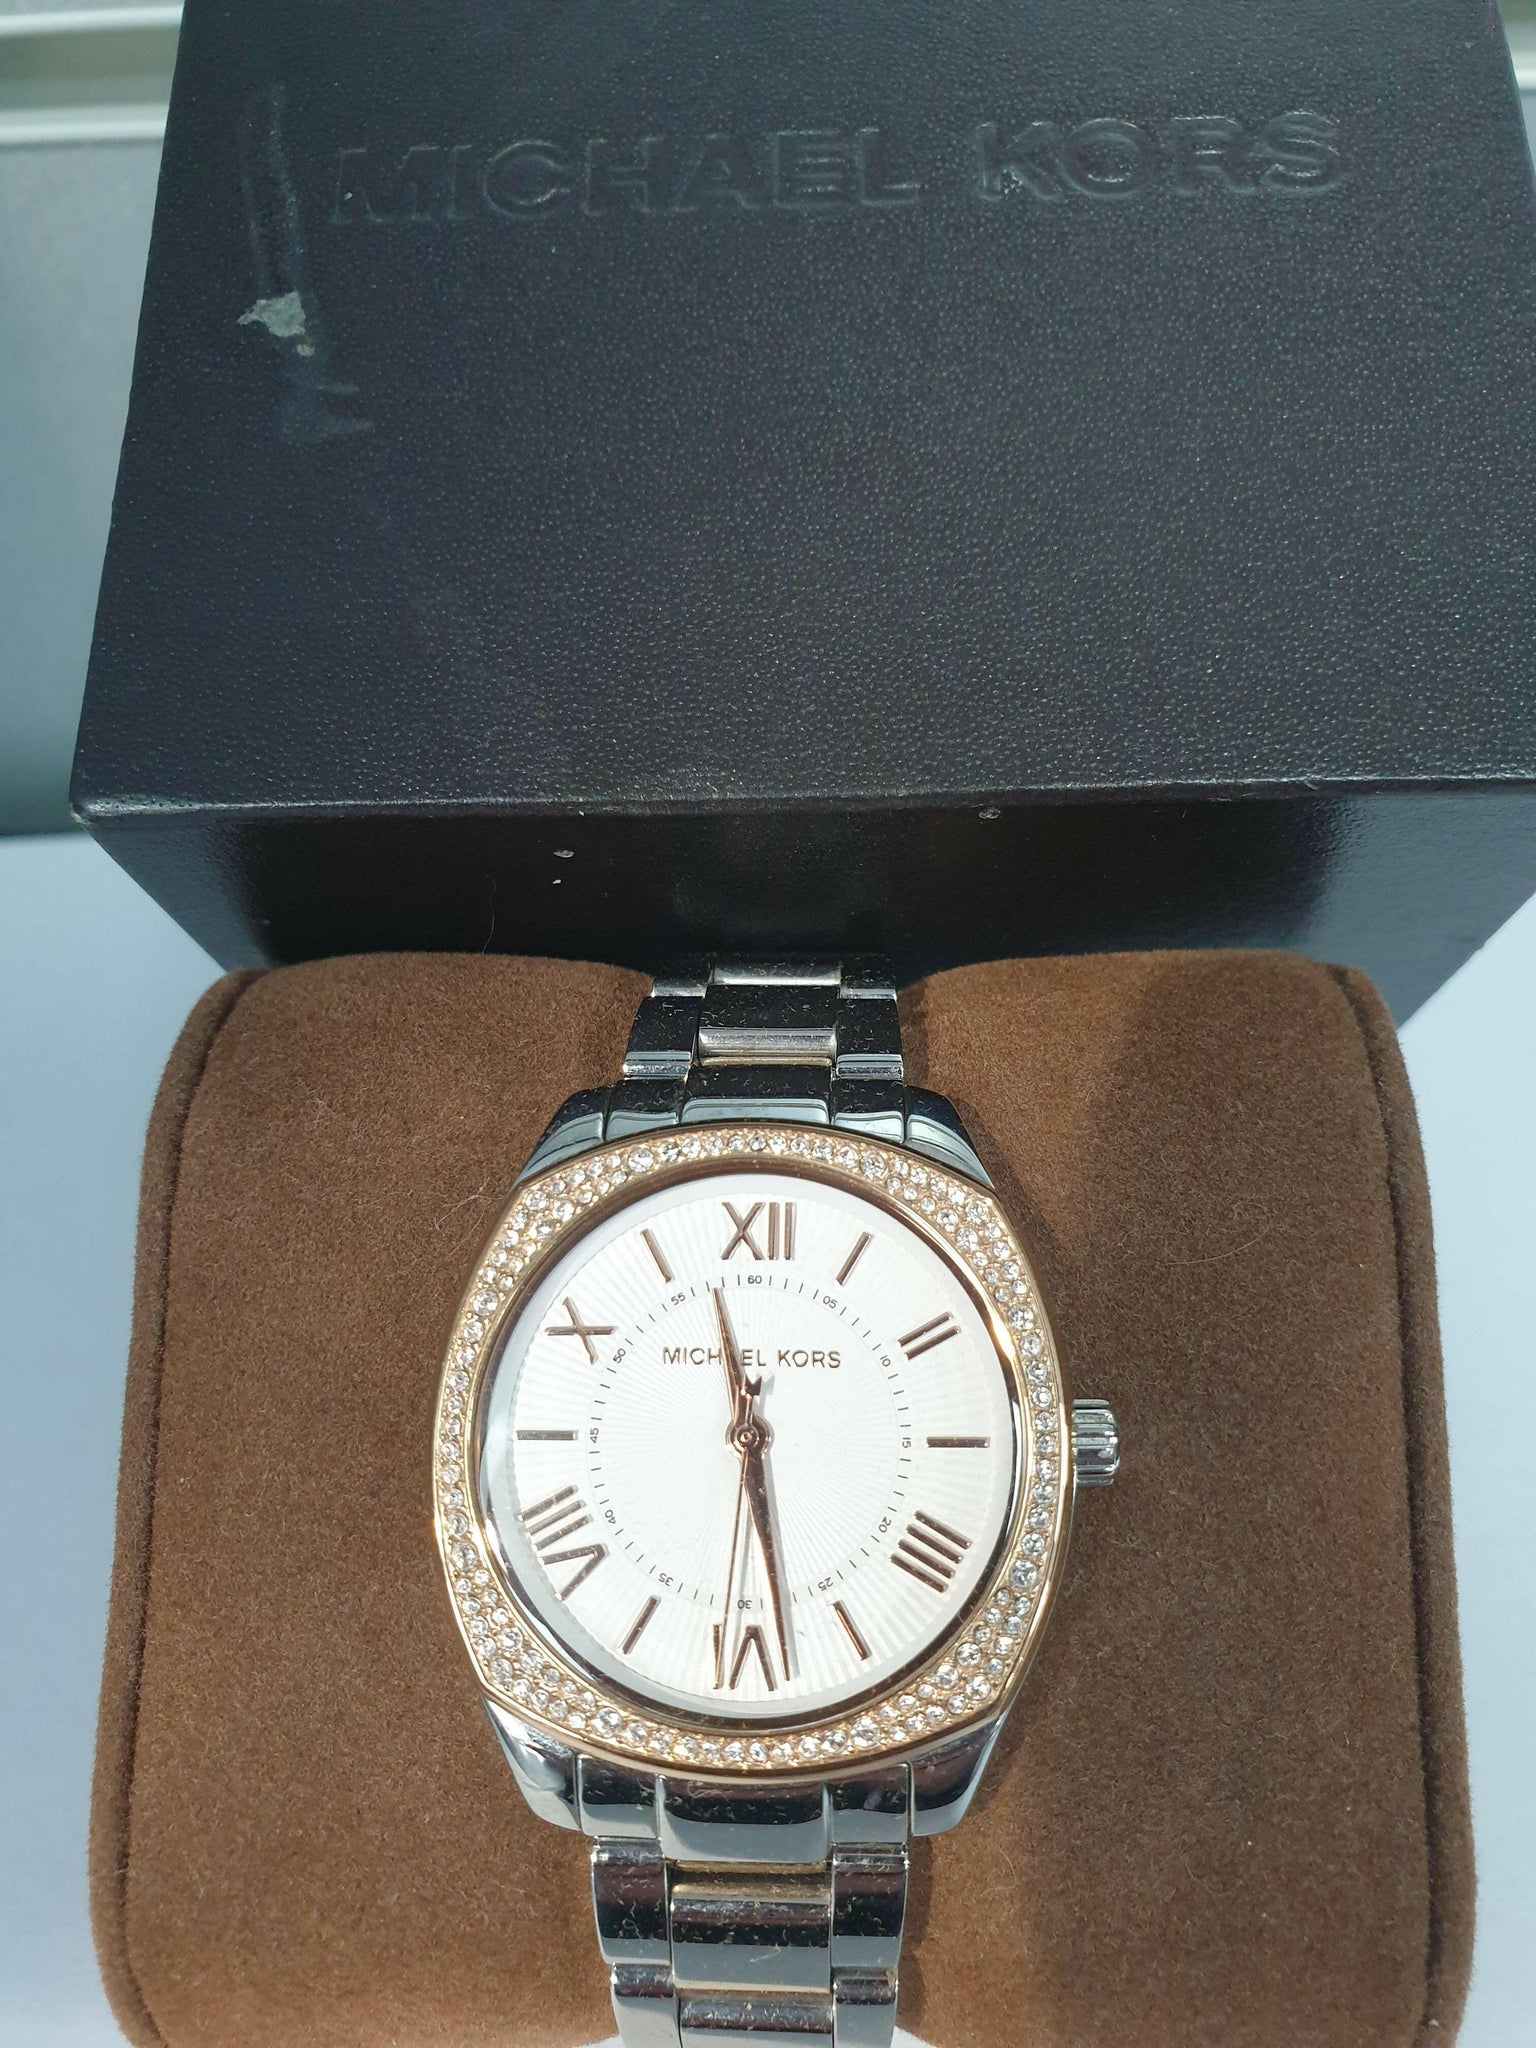 Michael Kors - Mini Bryn - MK-6315 quartz wristwatch no extra links